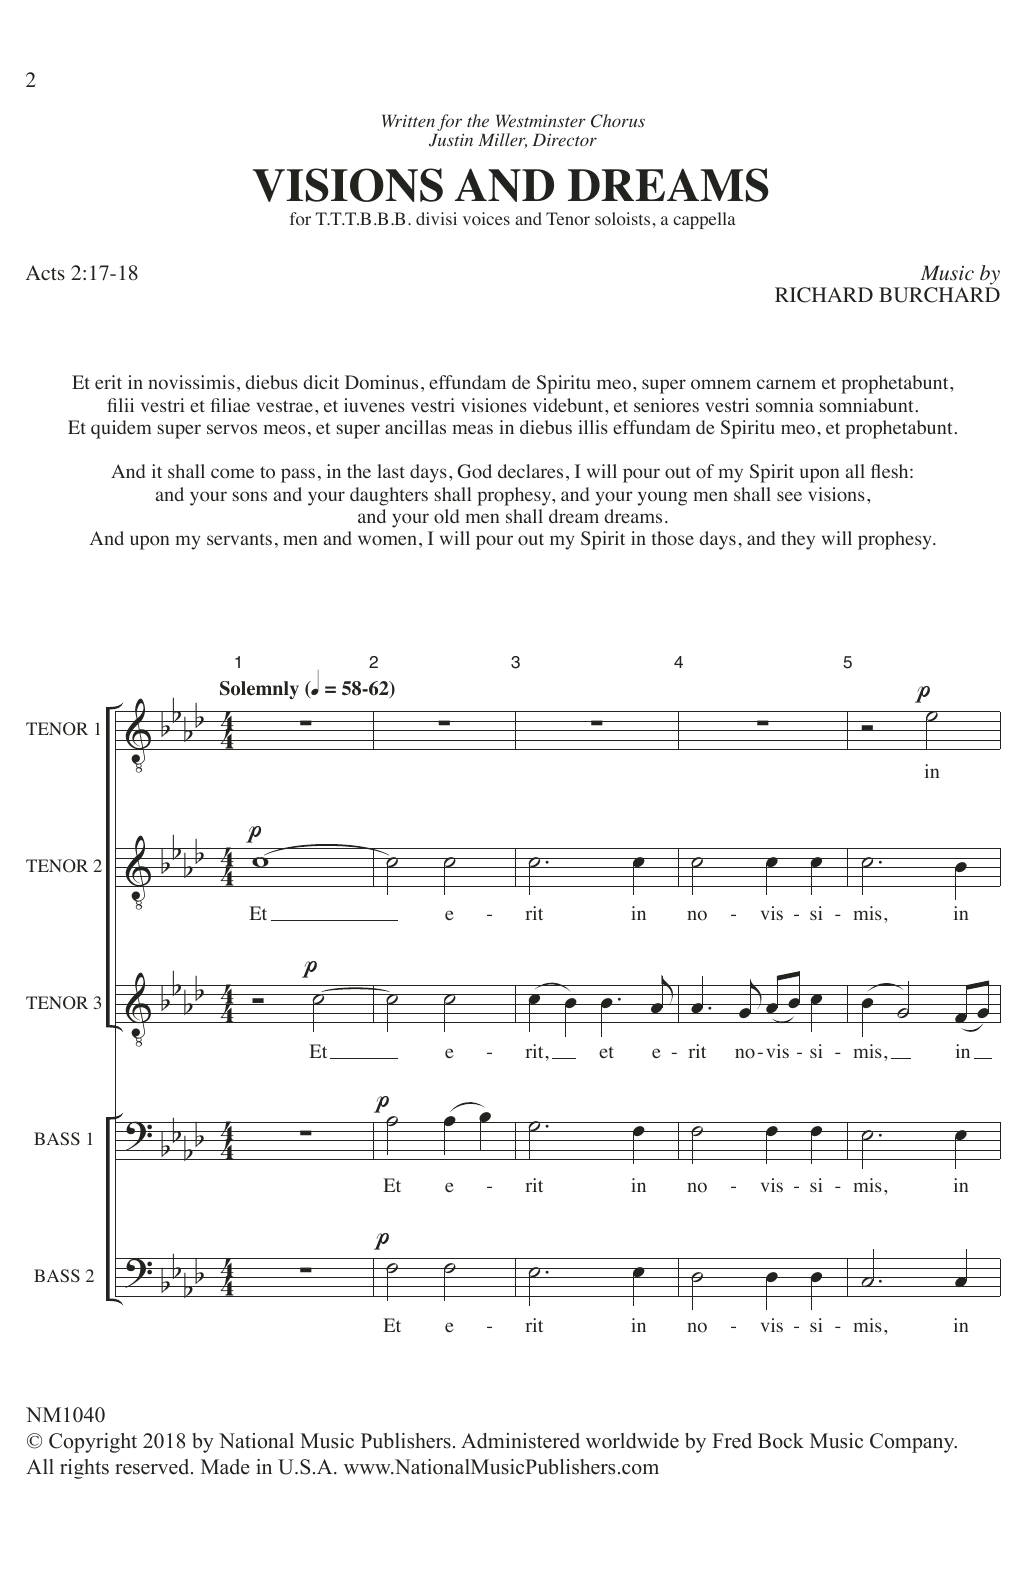 Richard Burchard Visions And Dreams Sheet Music Notes & Chords for TTBB Choir - Download or Print PDF